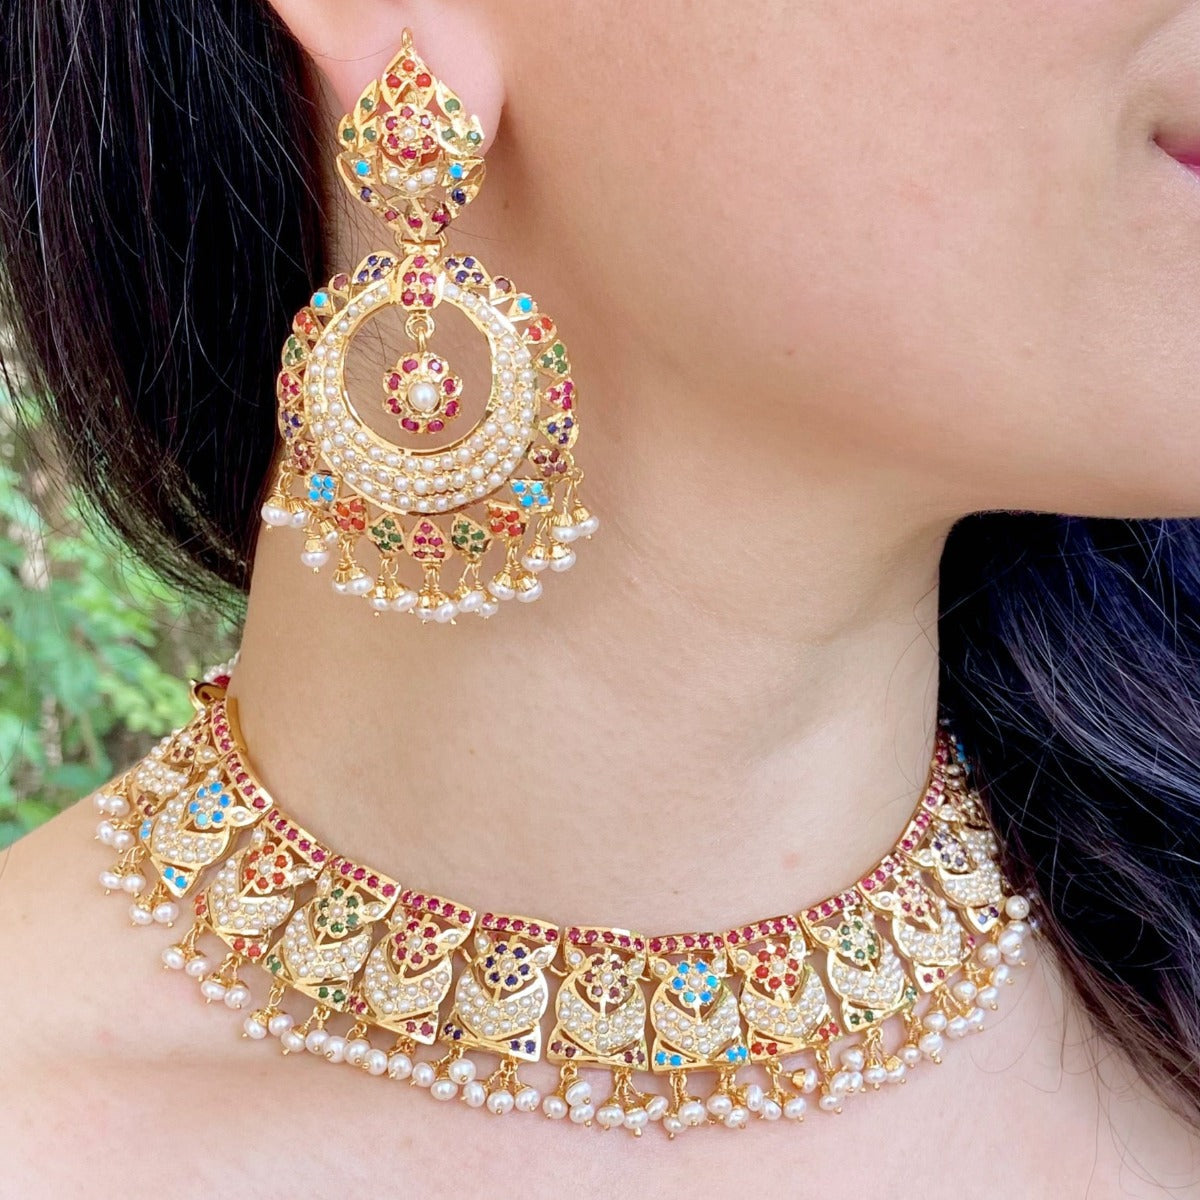 Indian navratna jewelry